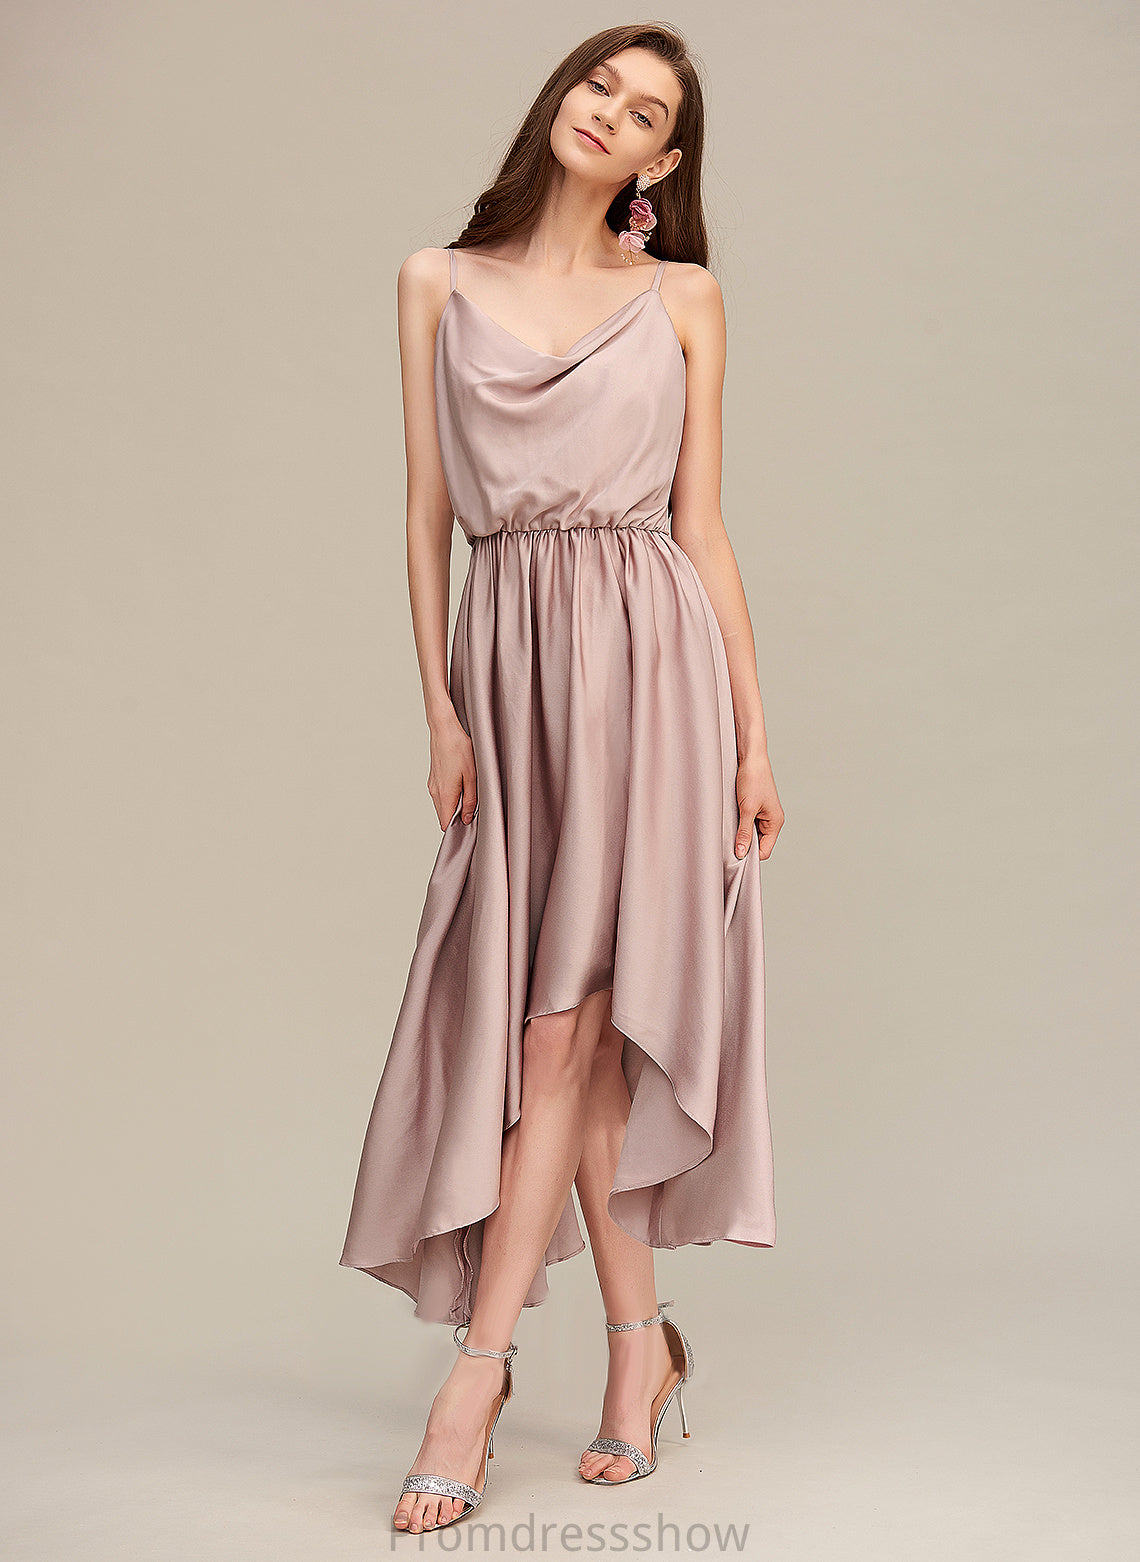 Gianna Cowl A-line Dresses Neck Formal Dresses